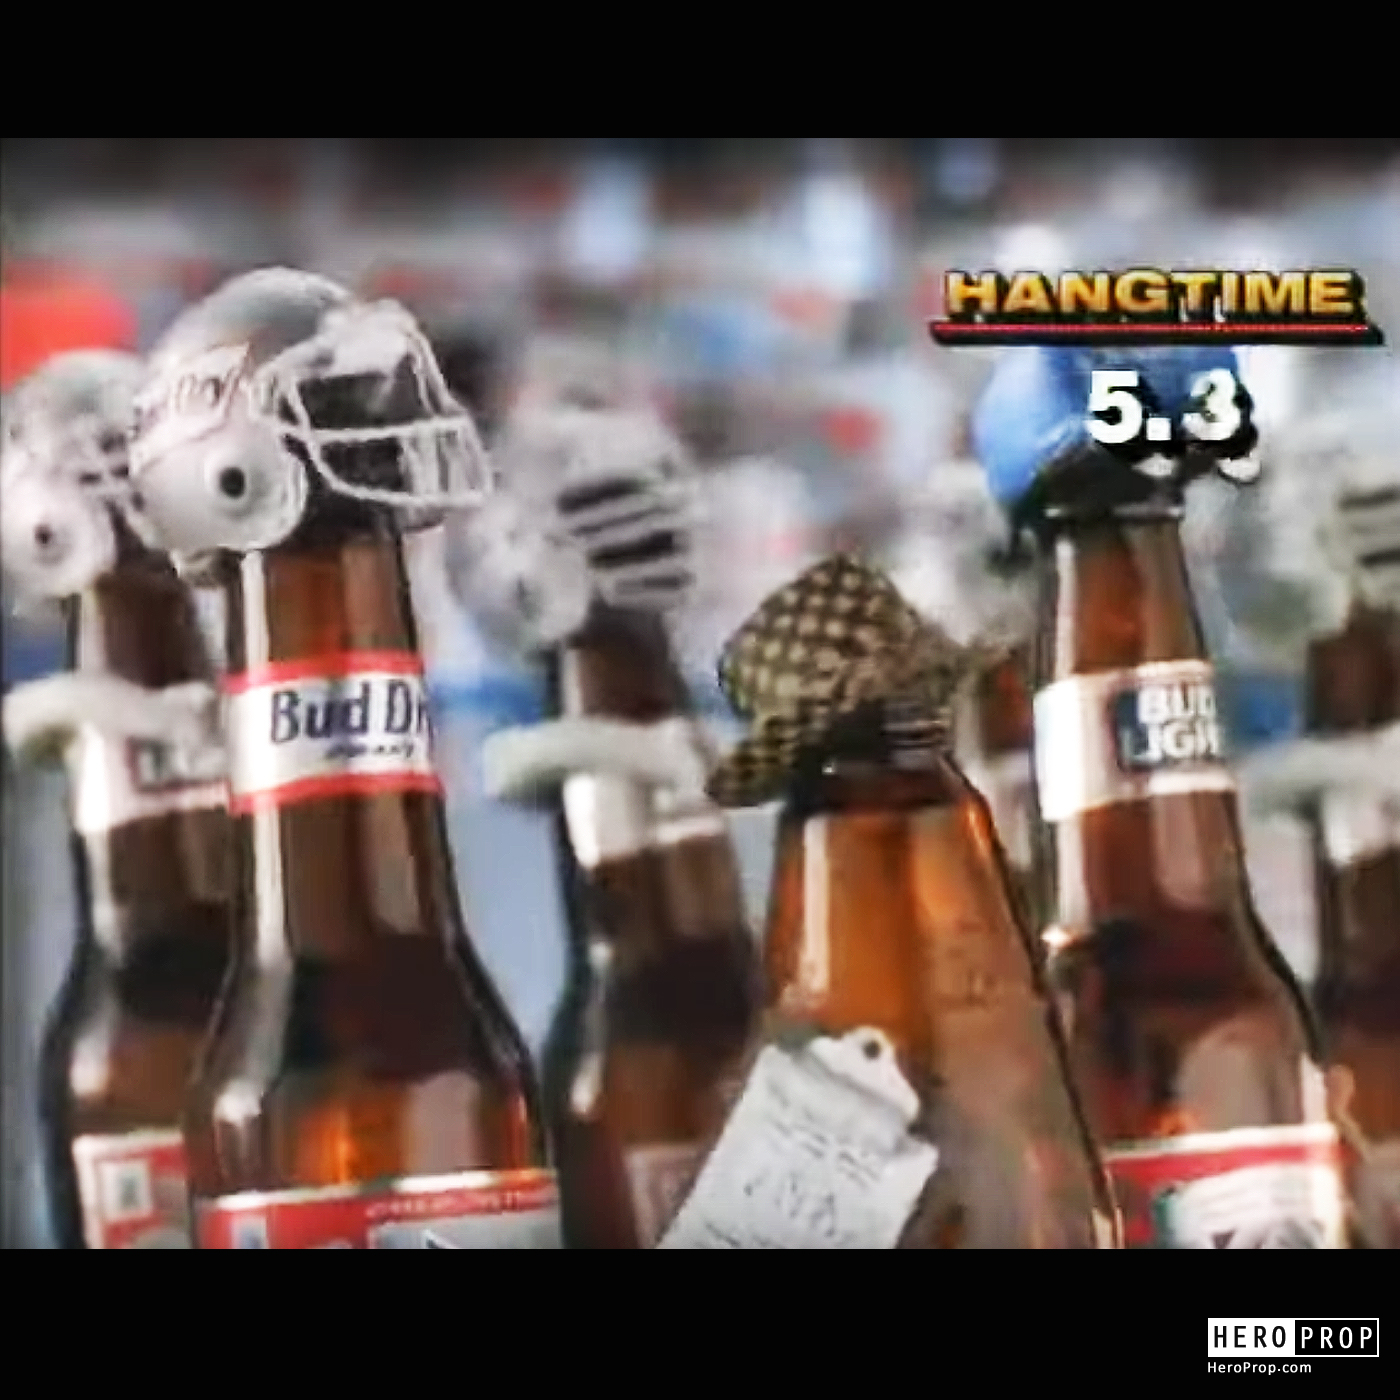 Budweiser and Bud Light Bud Bowl Super Bowl Commercial Helmets